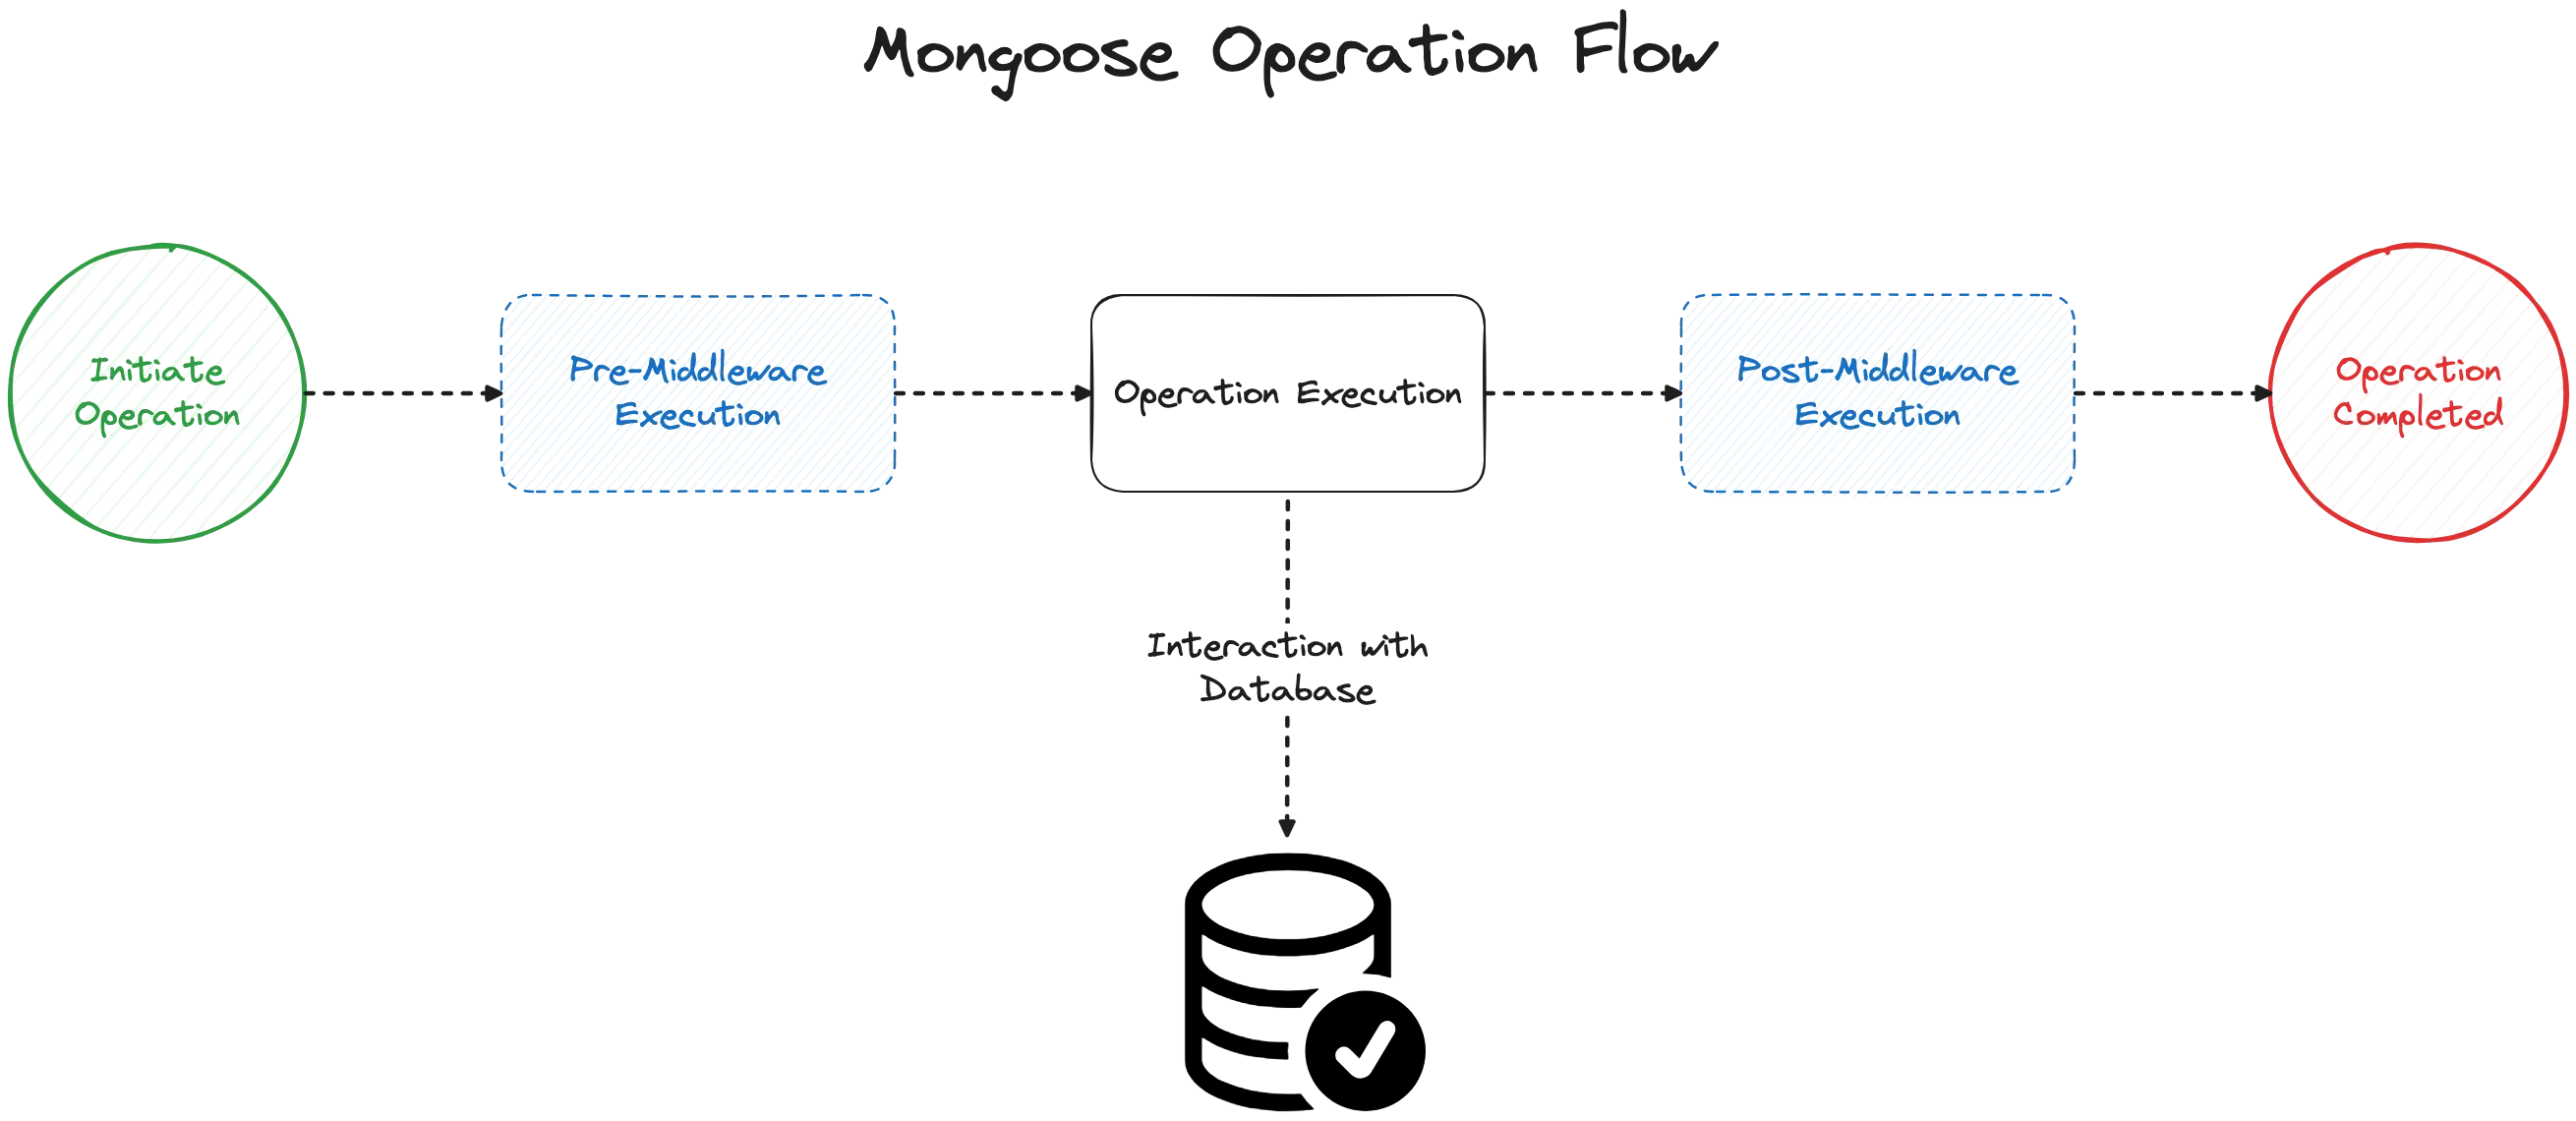 Mongoose Operation Workflow Diagram